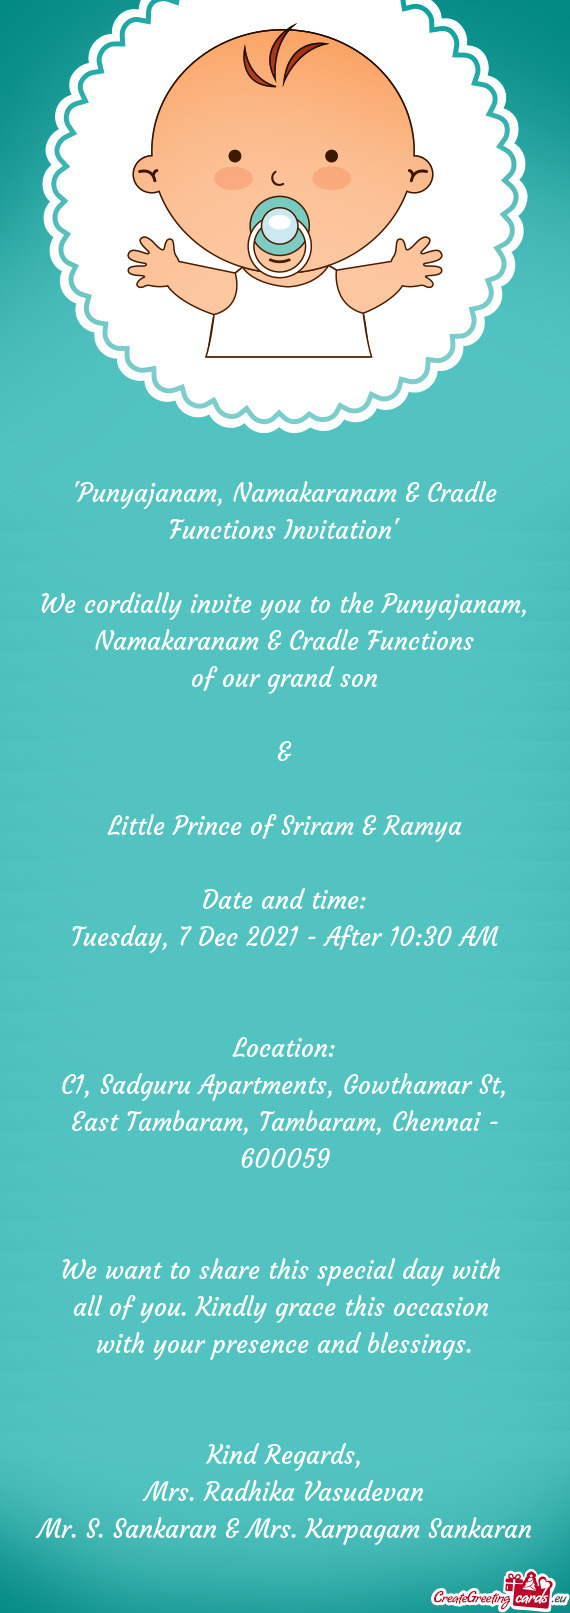 "Punyajanam, Namakaranam & Cradle Functions Invitation"